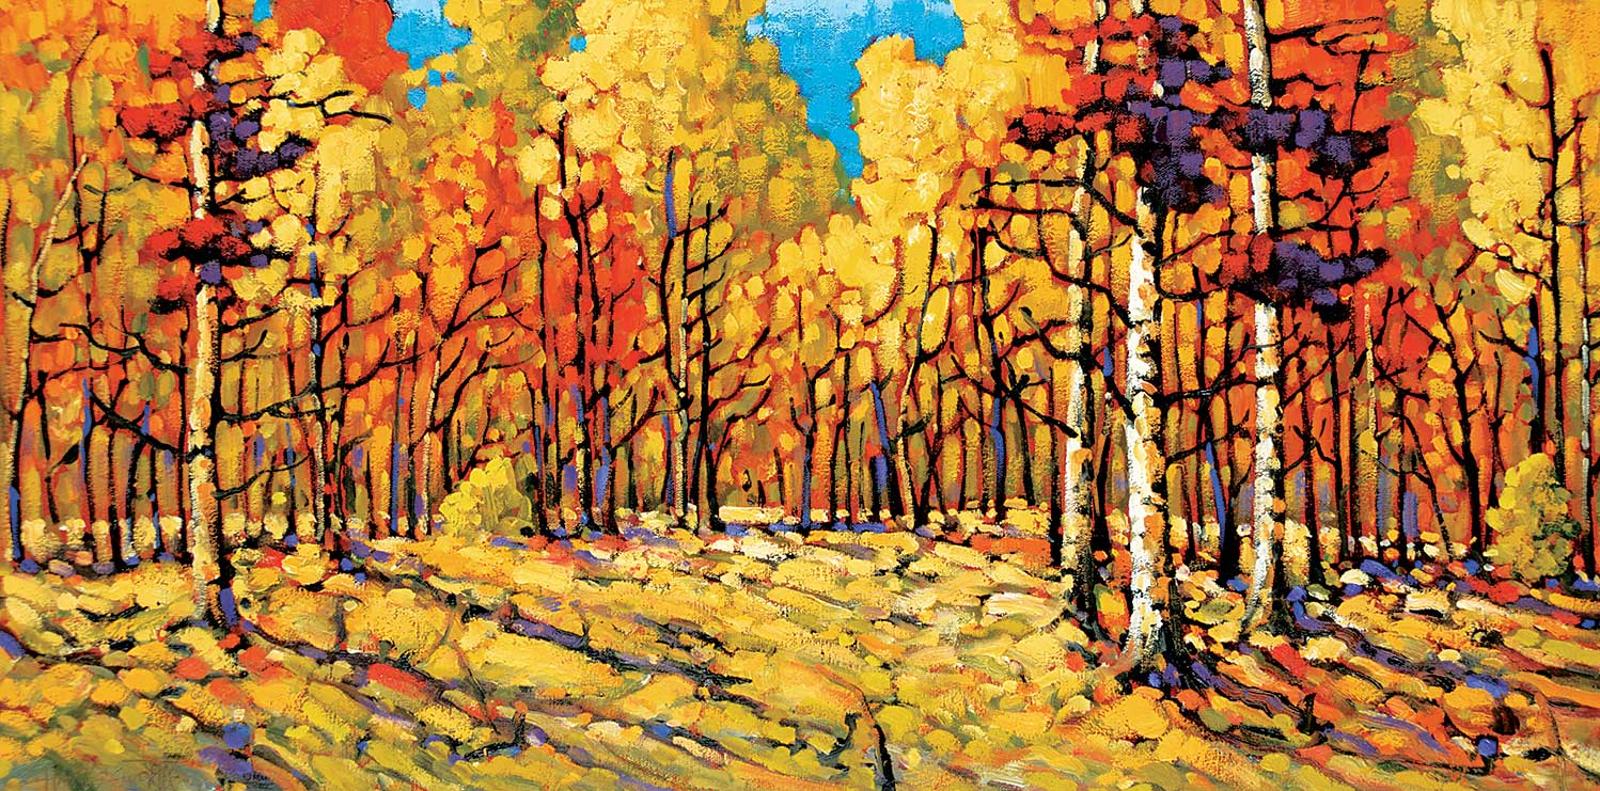 Rod Charlesworth (1955) - The Peak of Autumn, Near Bragg Creek